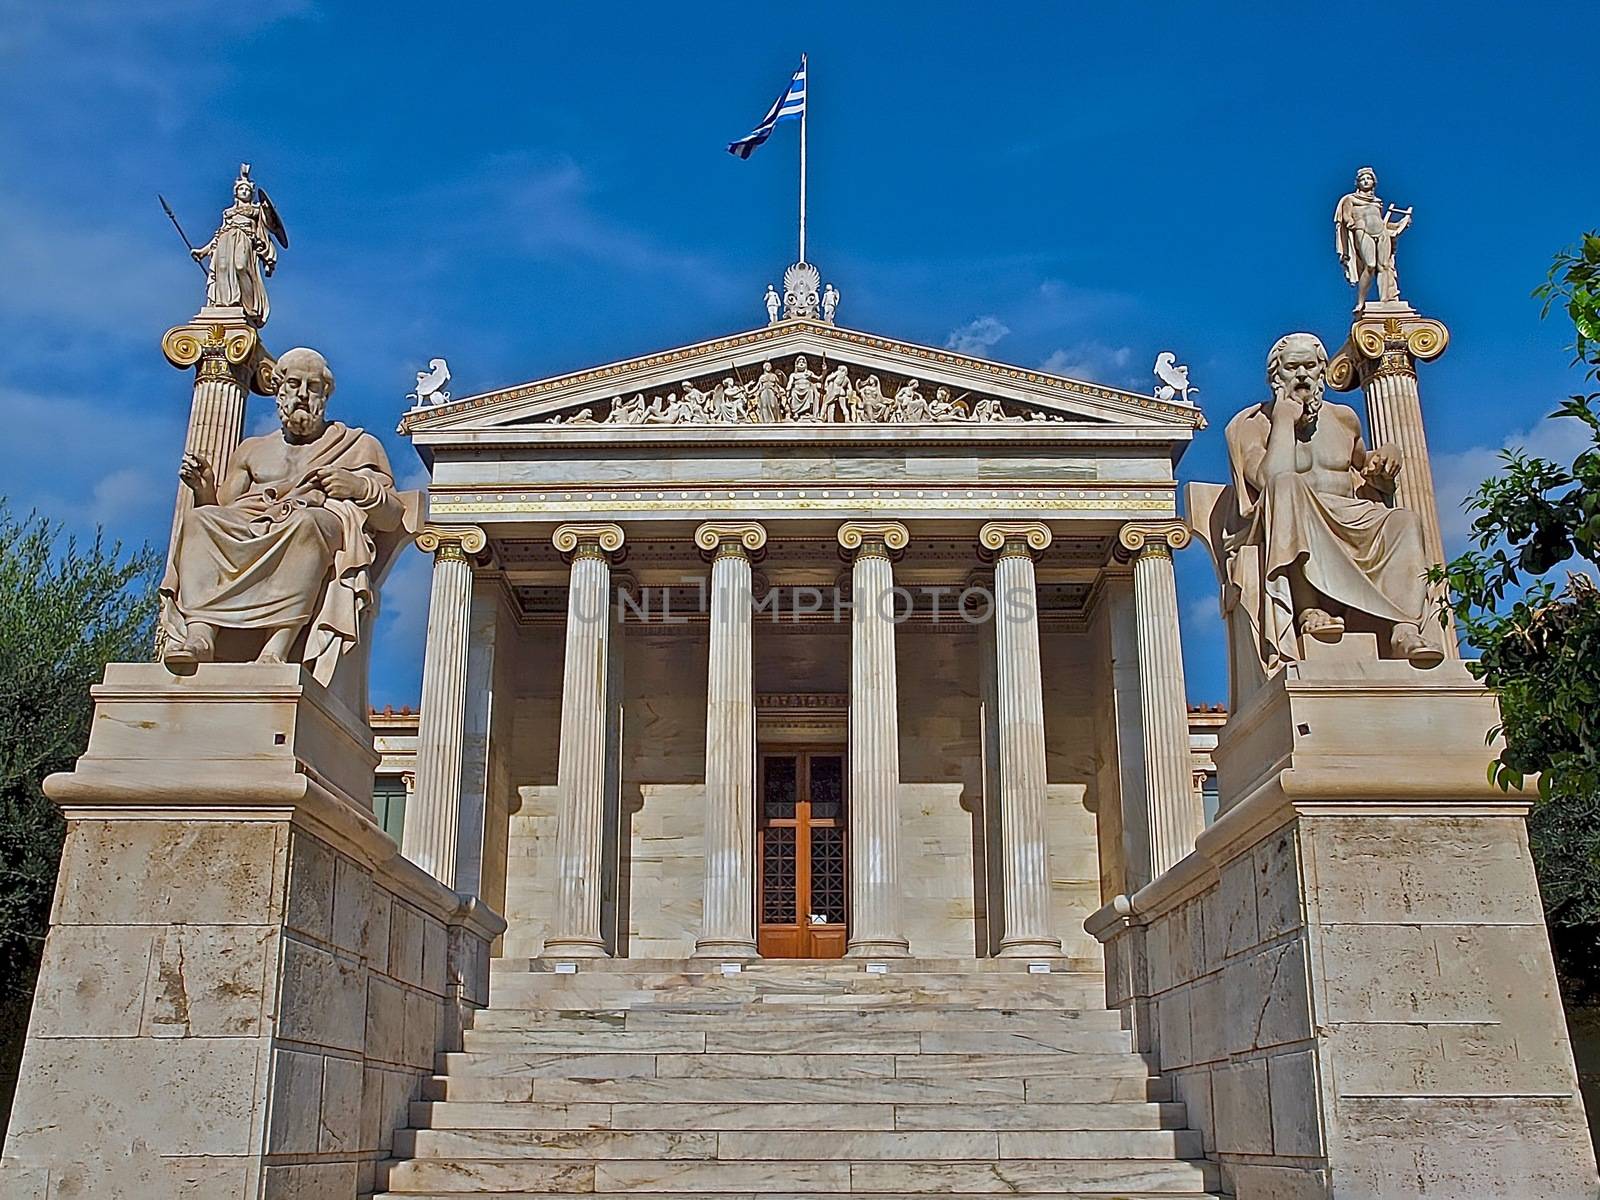 Wonderful architecture shows the University in Athens in Greece by Stimmungsbilder